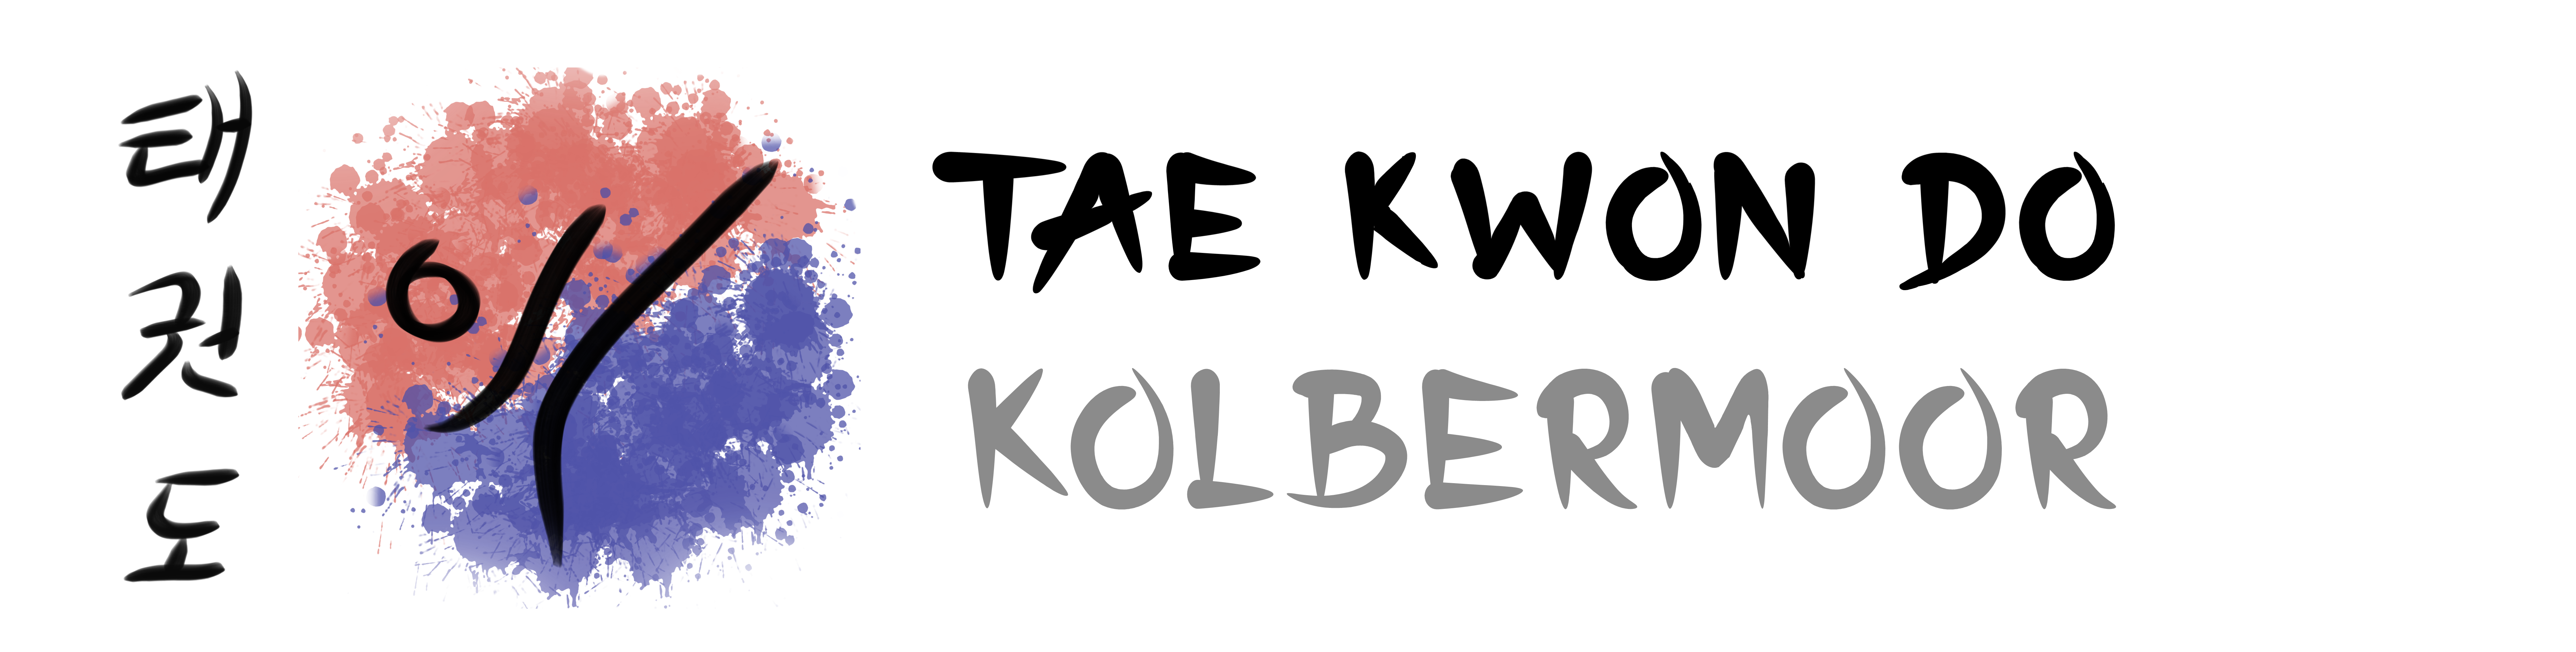 Taekwondo Kolbermoor